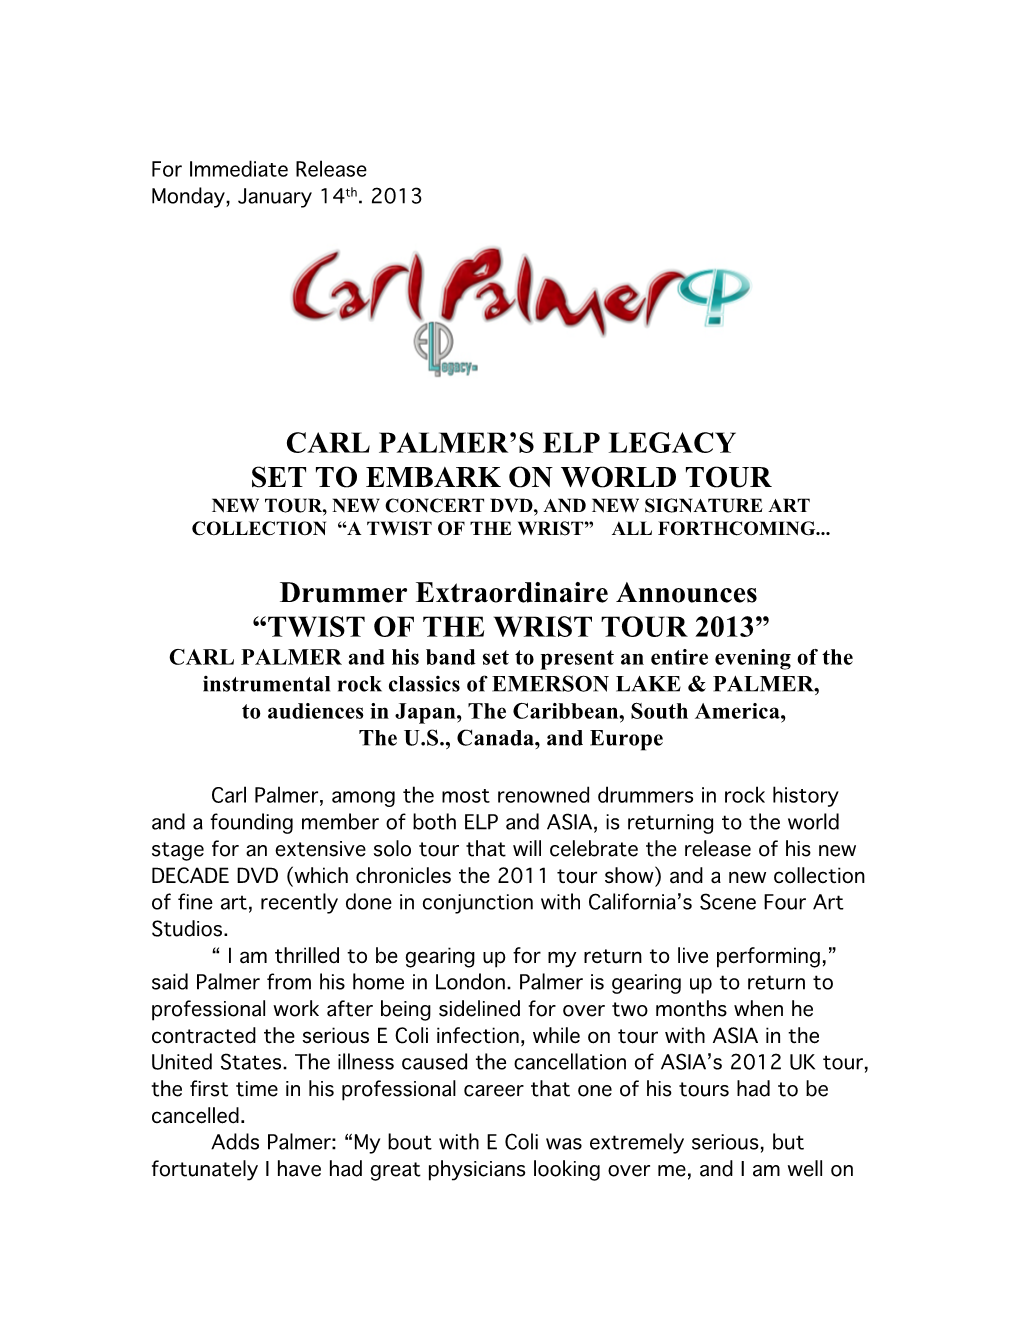 Carl Palmer's Elp Legacy Set to Embark on World Tour